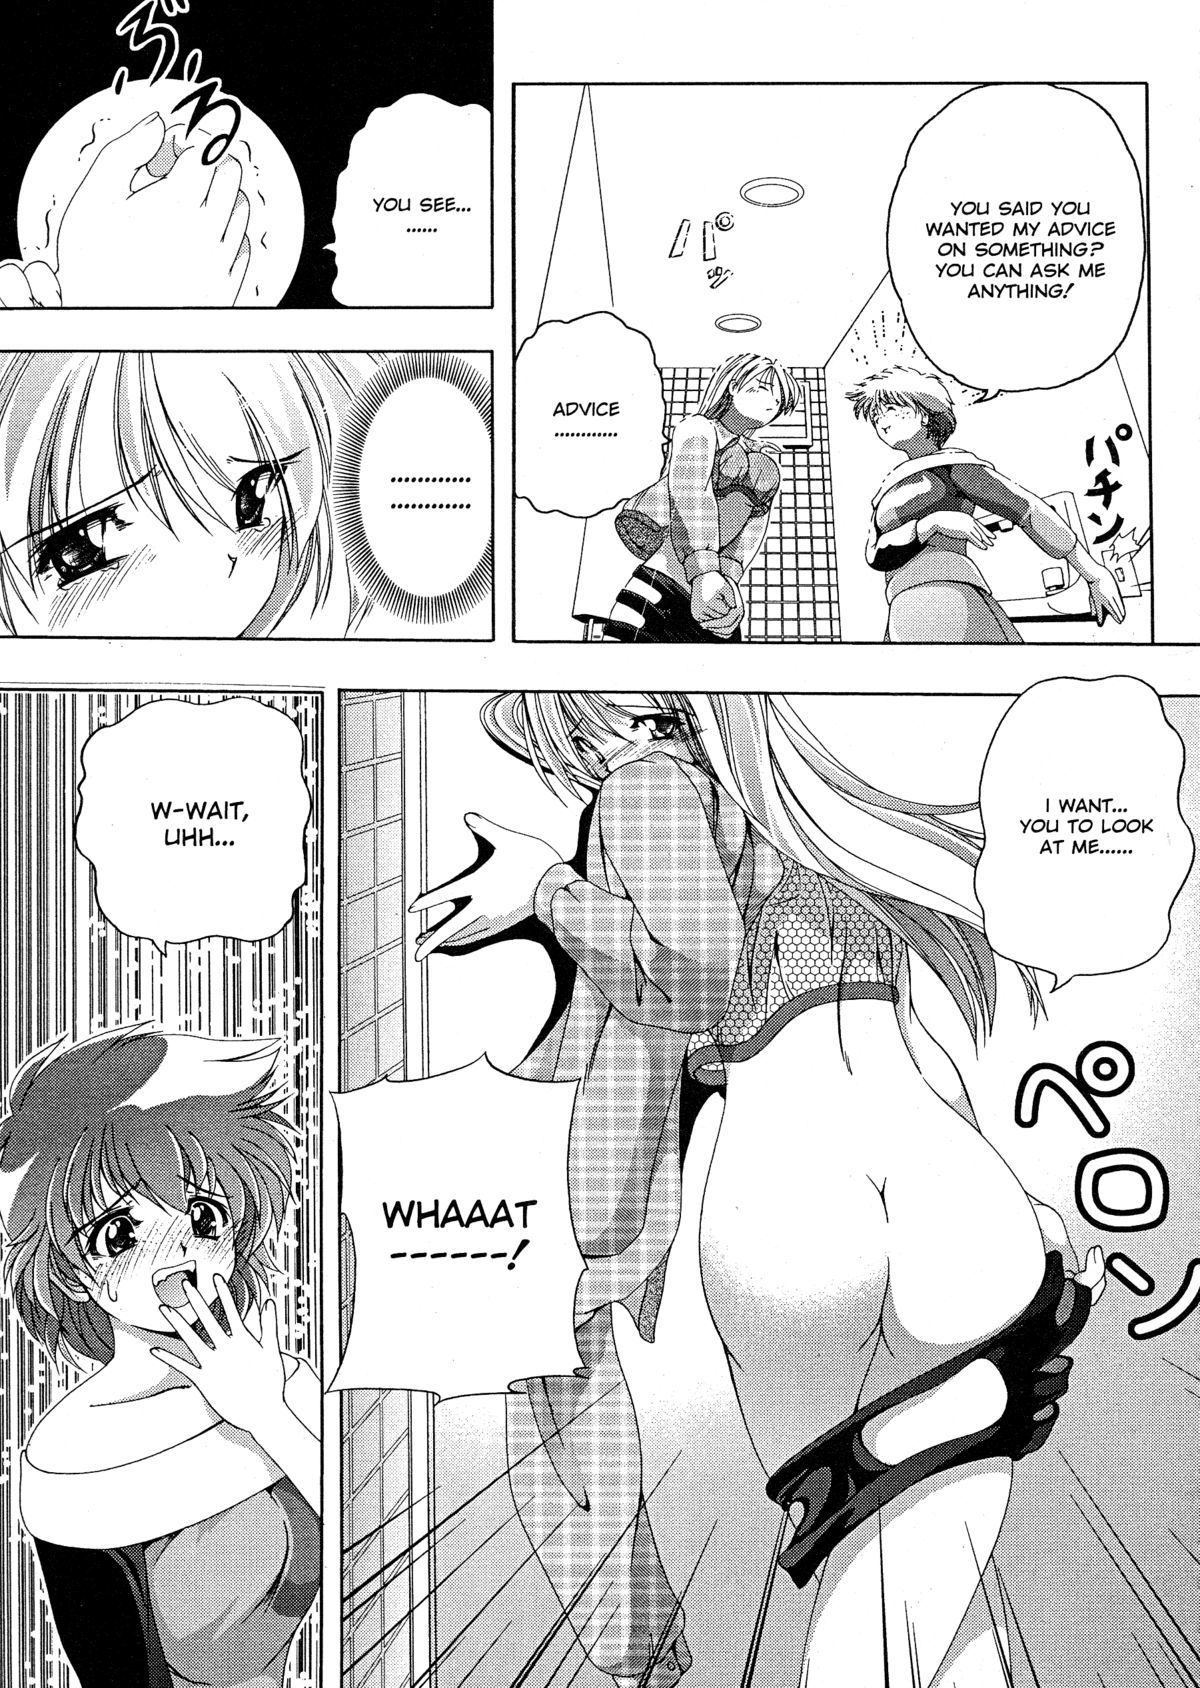 Flashbang!Hi-res 103 hentai manga